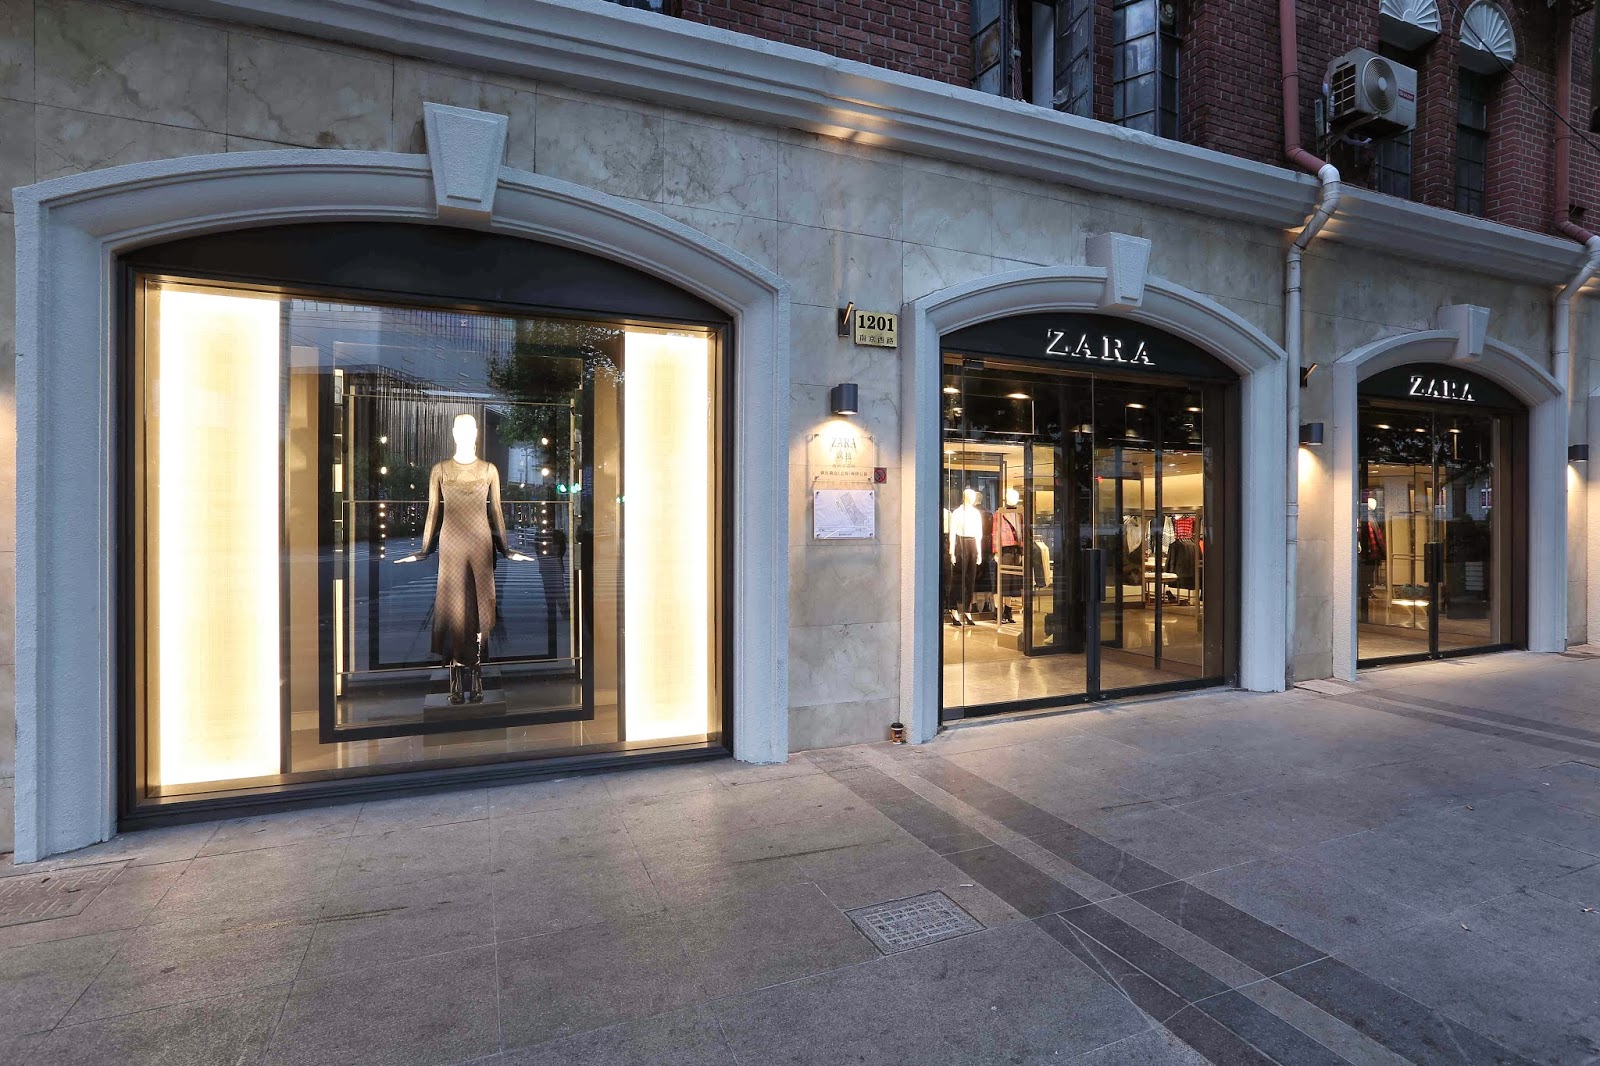 Where to Shop now? Shanghai - China's first Zara got a makeover